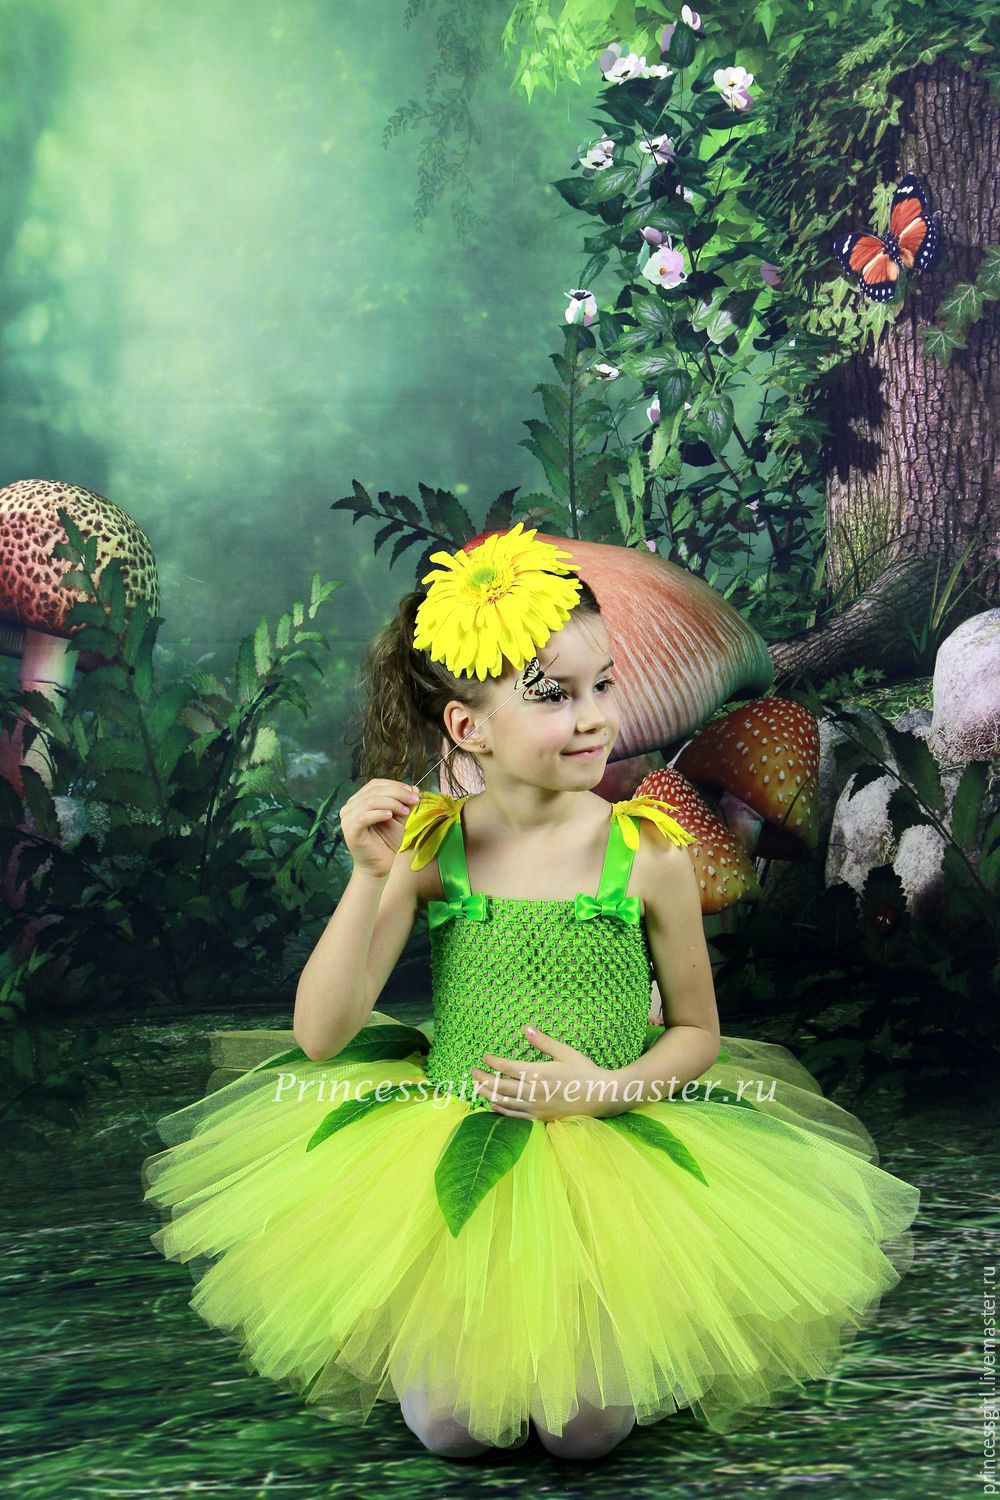 Flower costume for girls ( bright yellow) – купить на Ярмарке Мастеров ...